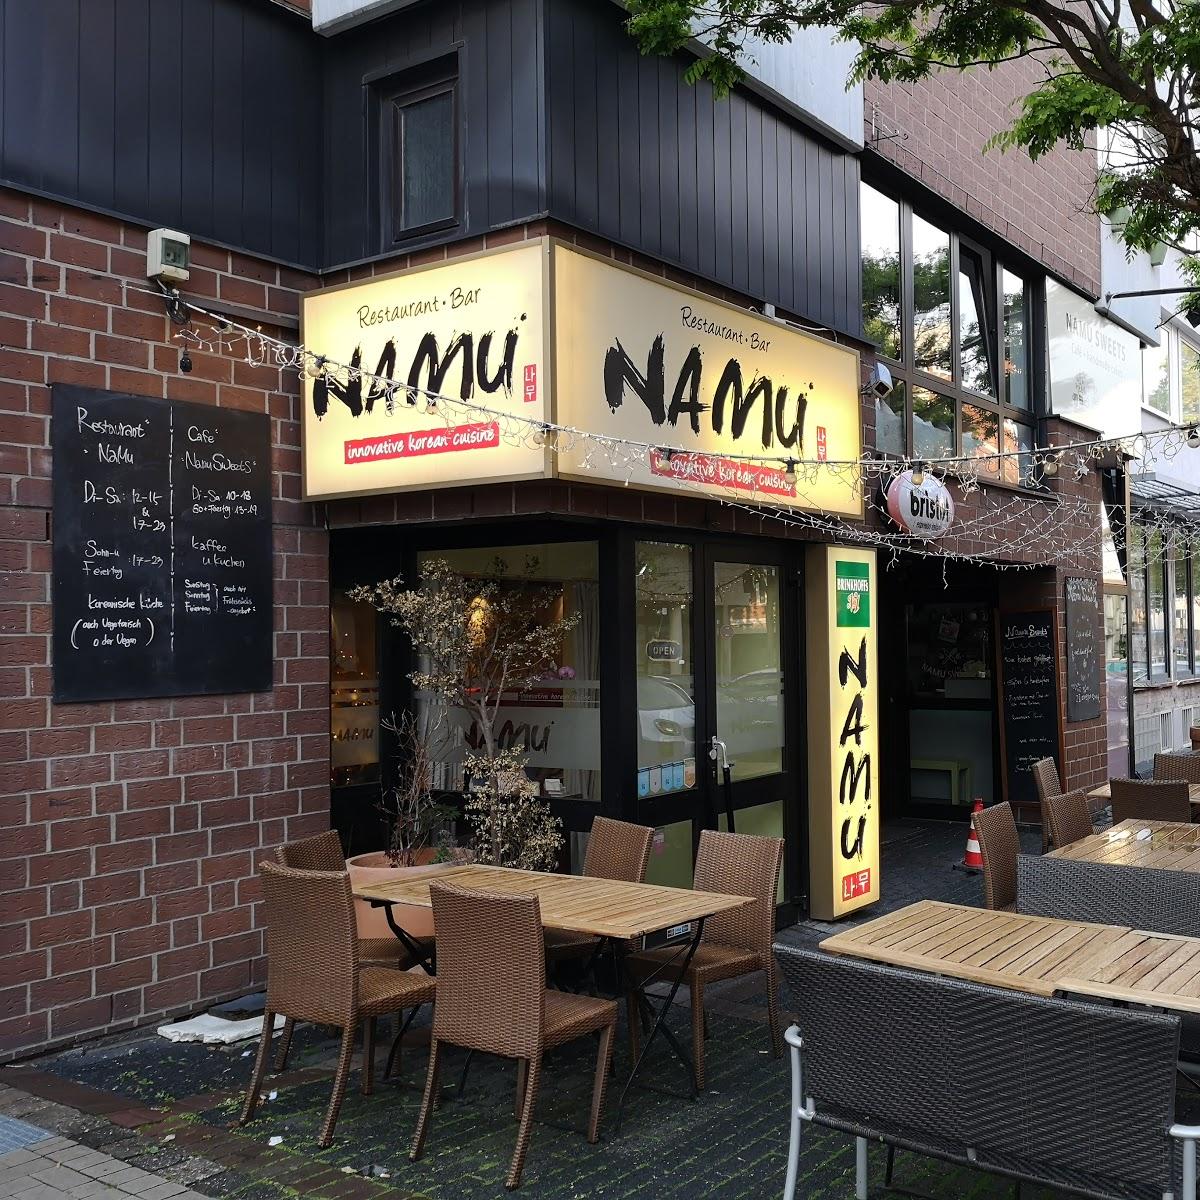 Restaurant "Restaurant Namu" in  Dortmund